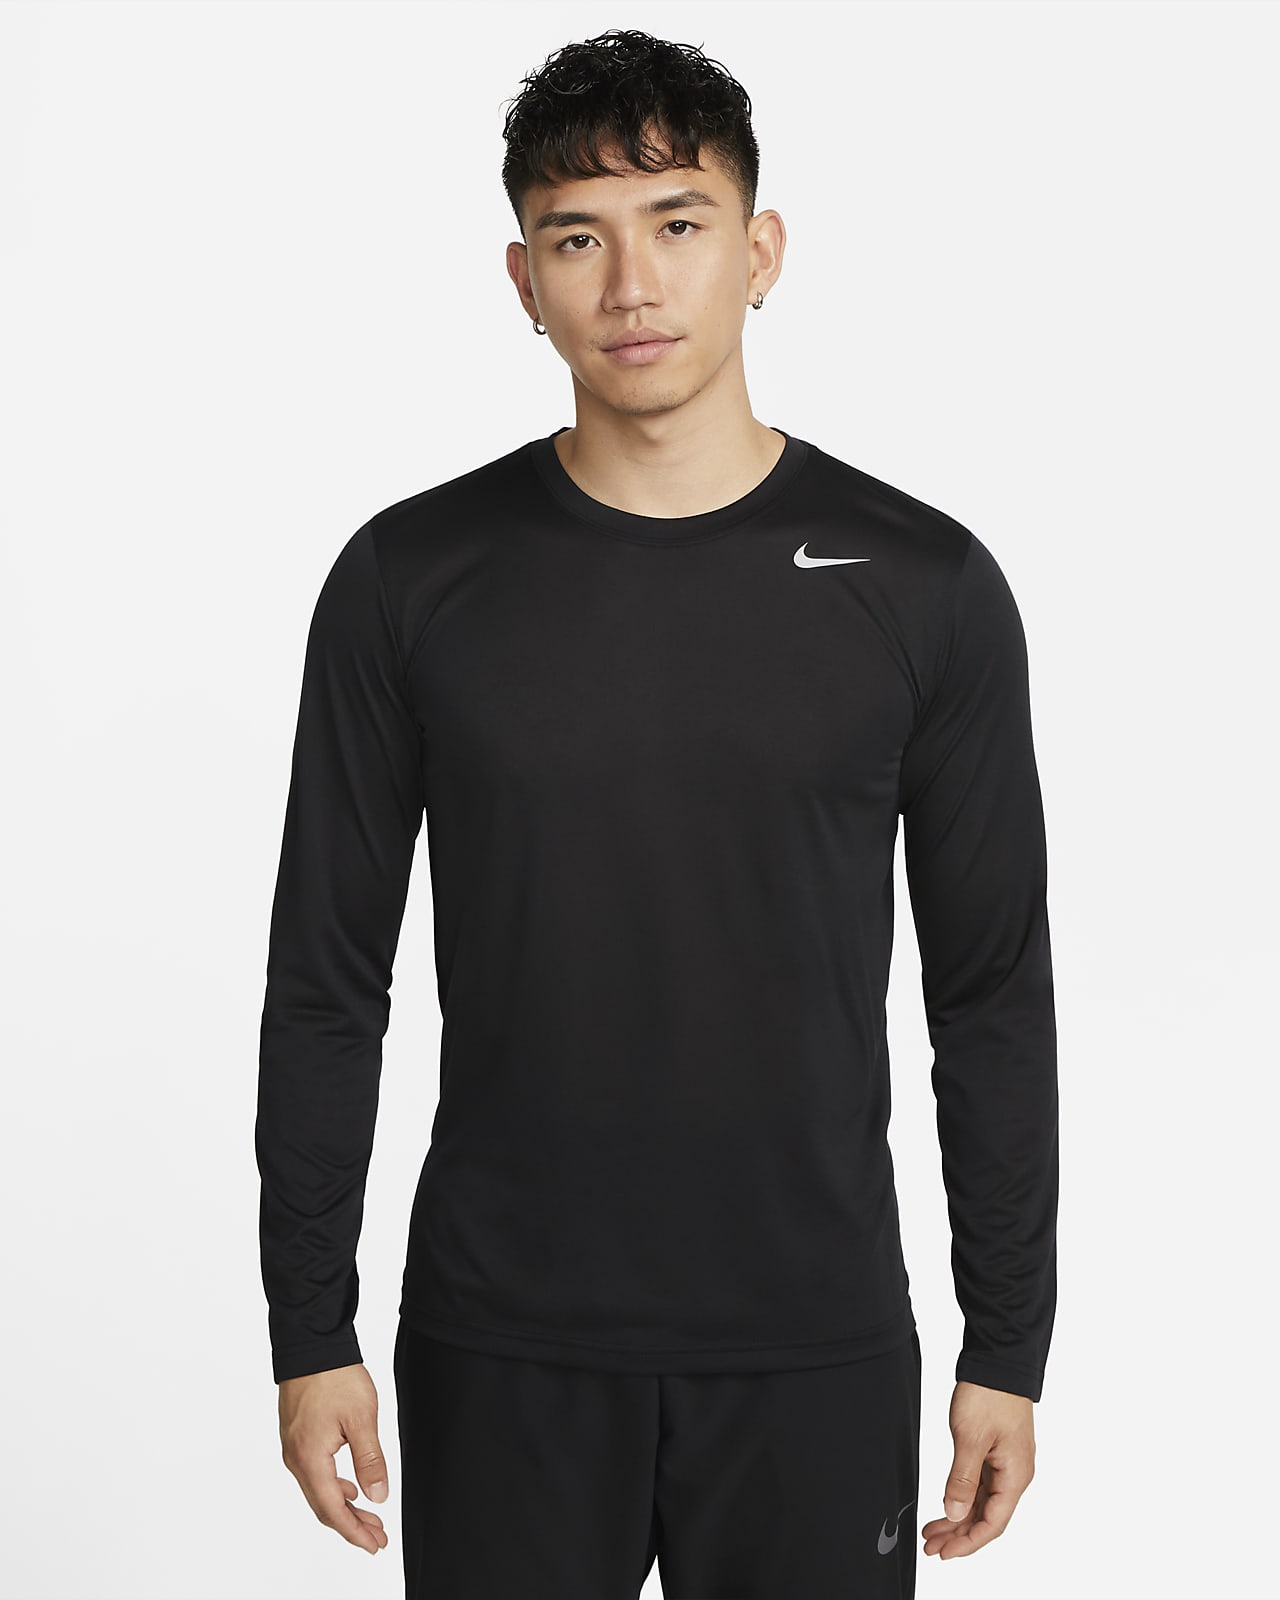 Nike Men's Training T-Shirt 718837, Dri-Fit Long Sleeve Anti-Odor